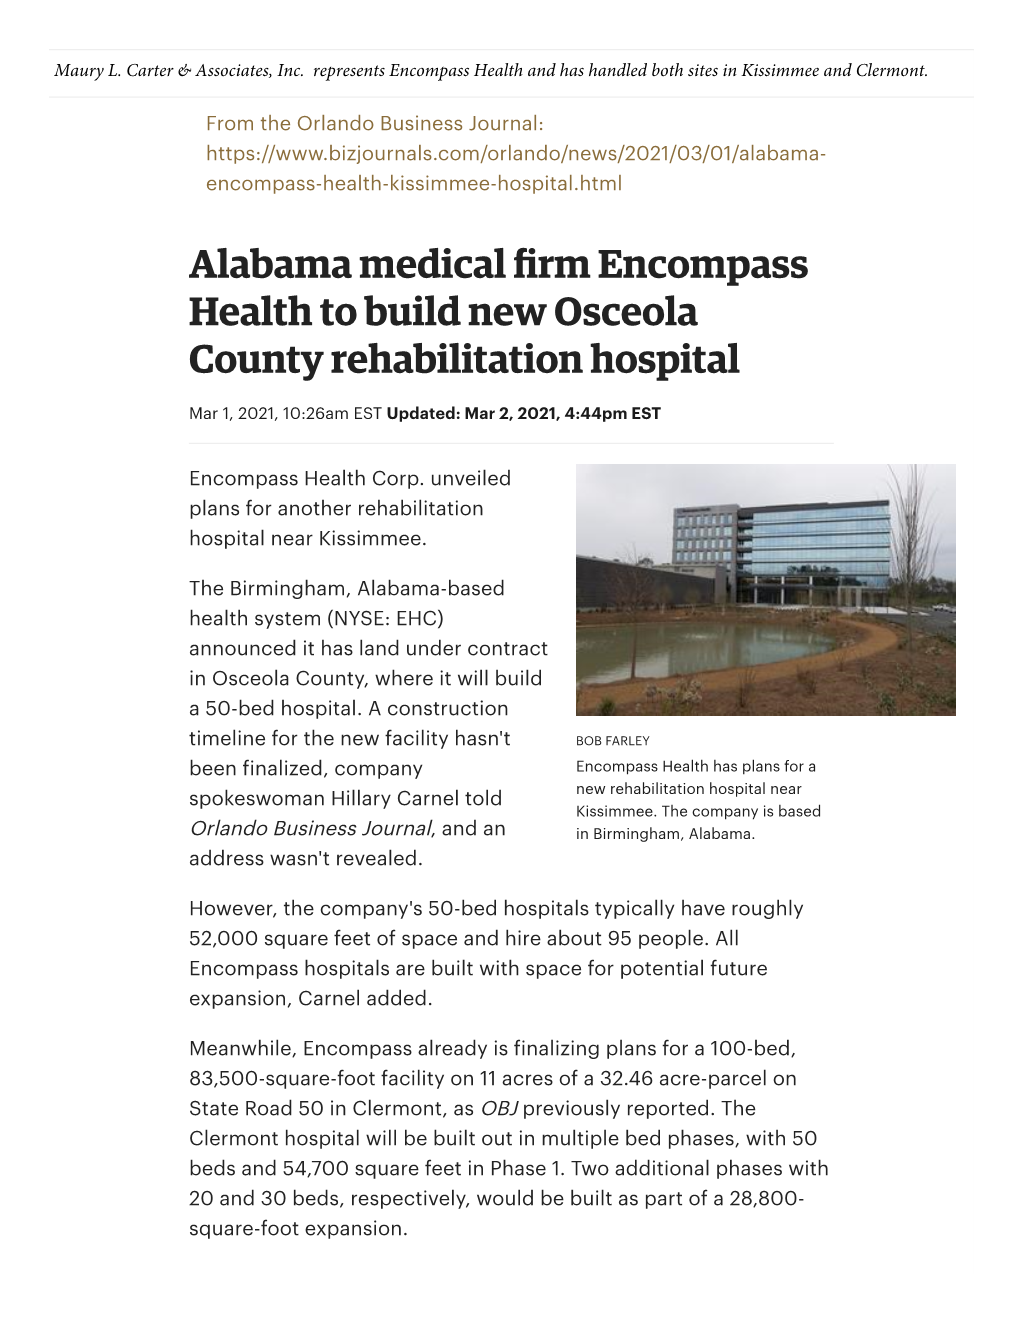 Alabama Medical Firm Encompass Health to Build New Osceola County